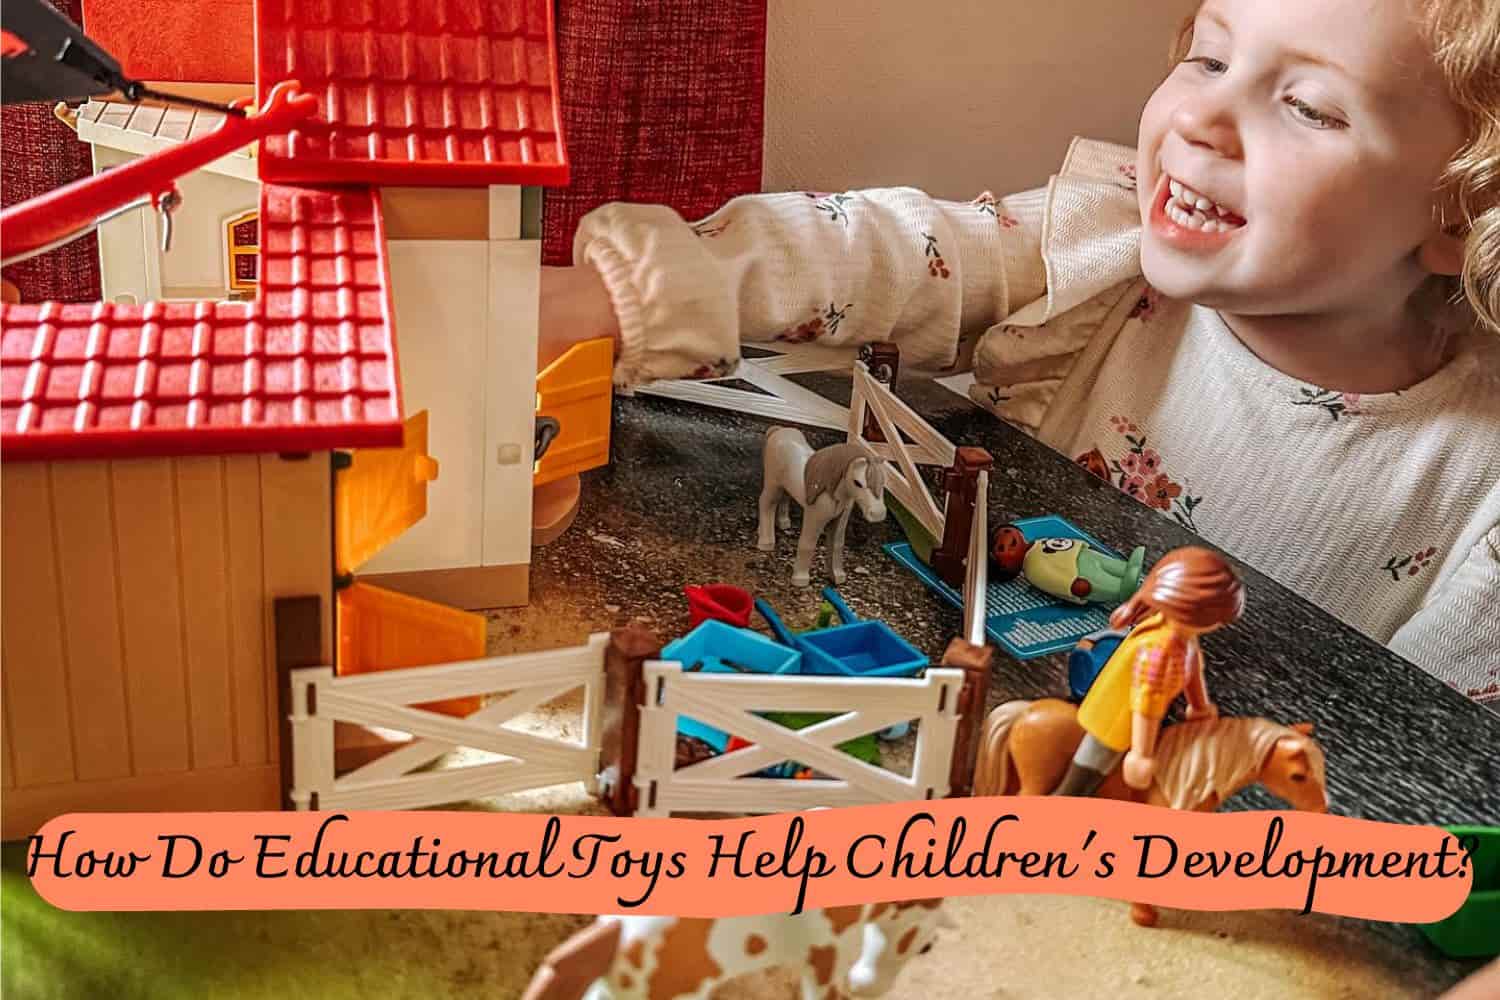 How Do Educational Toys Help Children's Development?